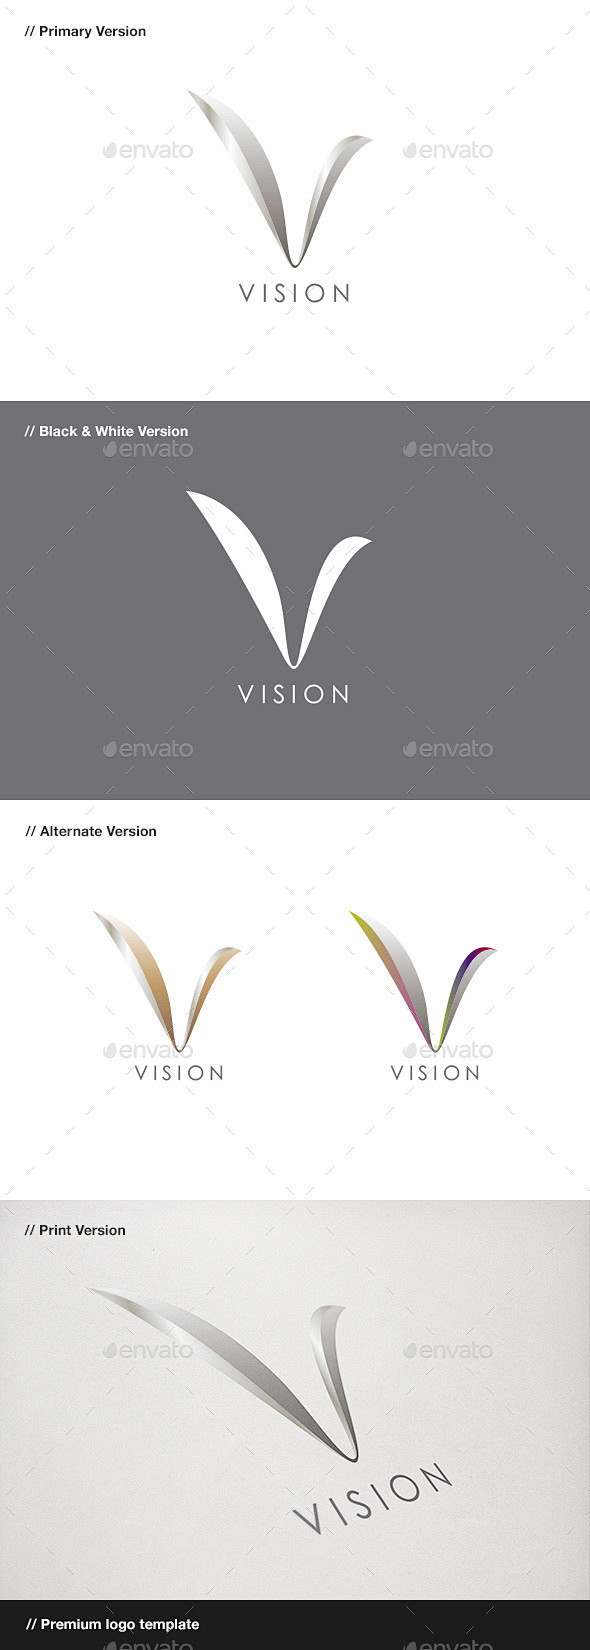 Vision - Abstract & ...